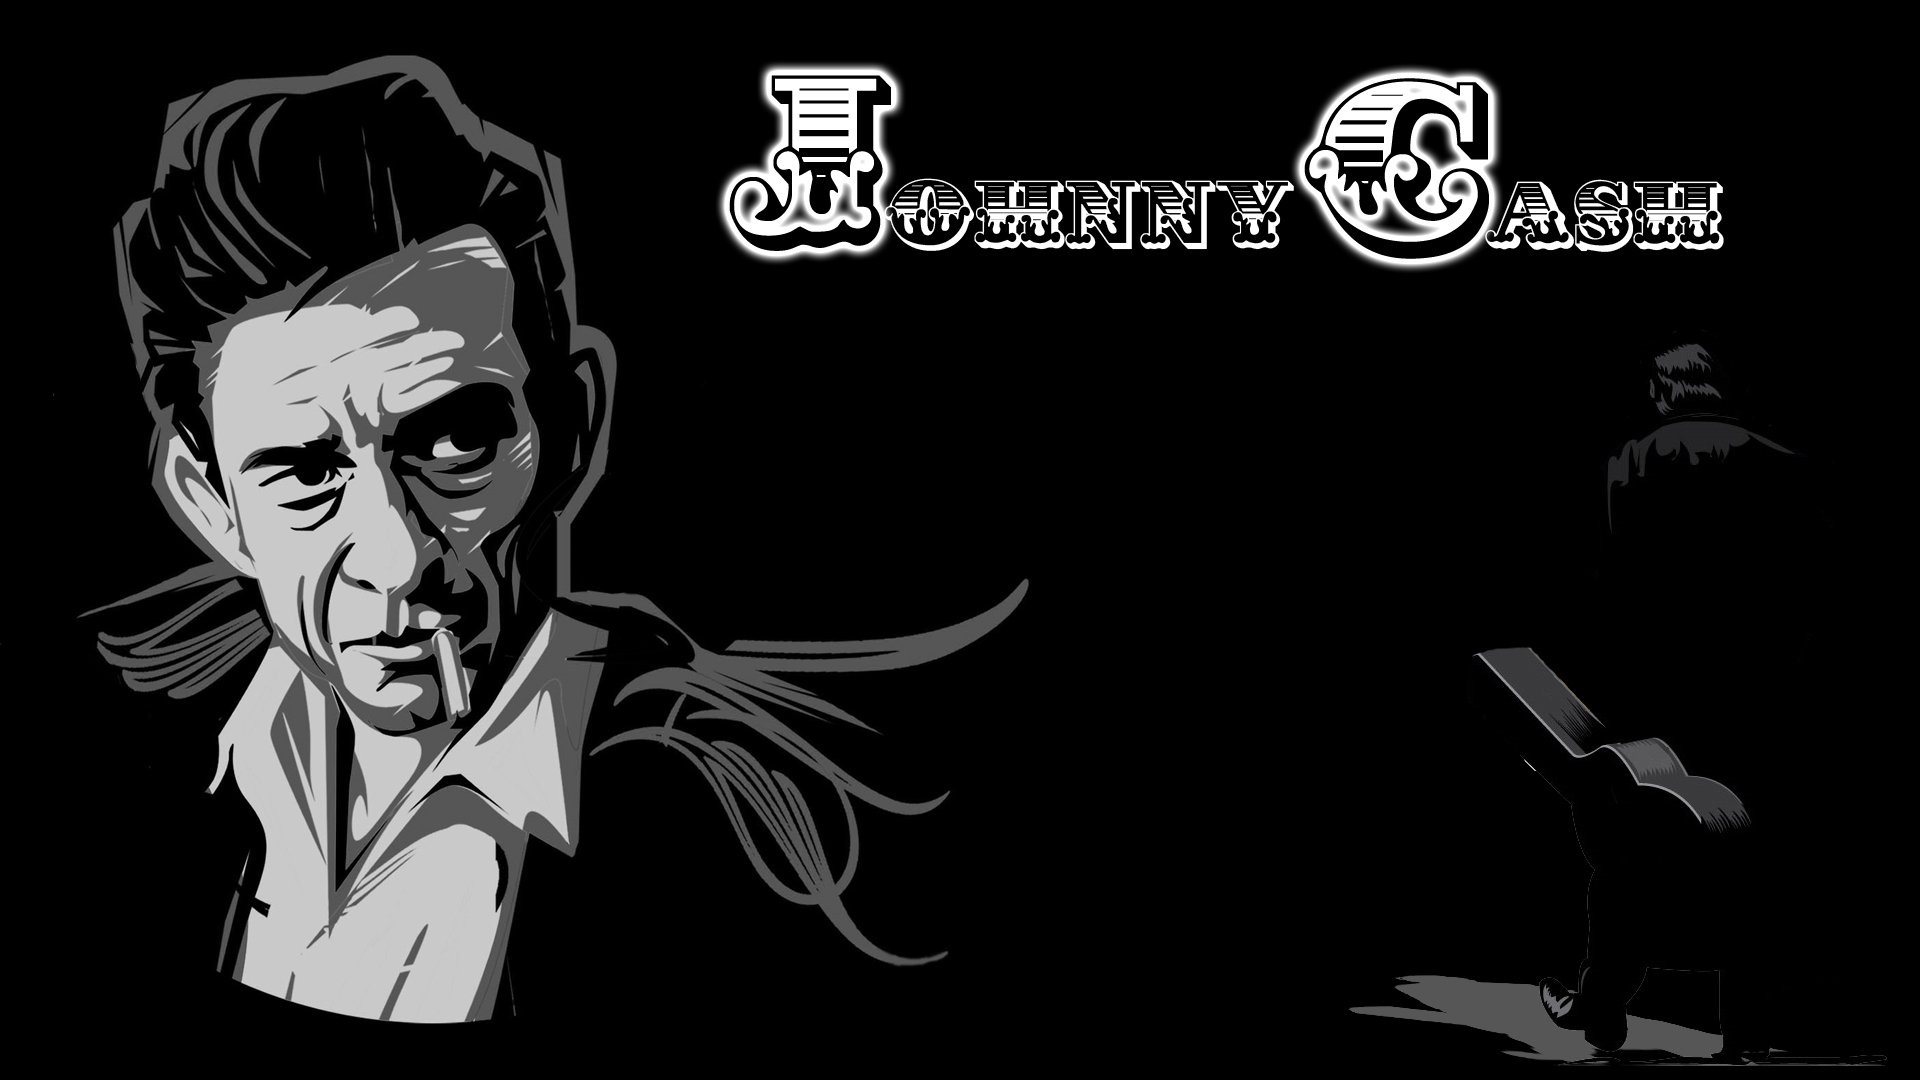 Johnny Cash, Music legend, Cash man wallpaper, 1920x1080 Full HD Desktop